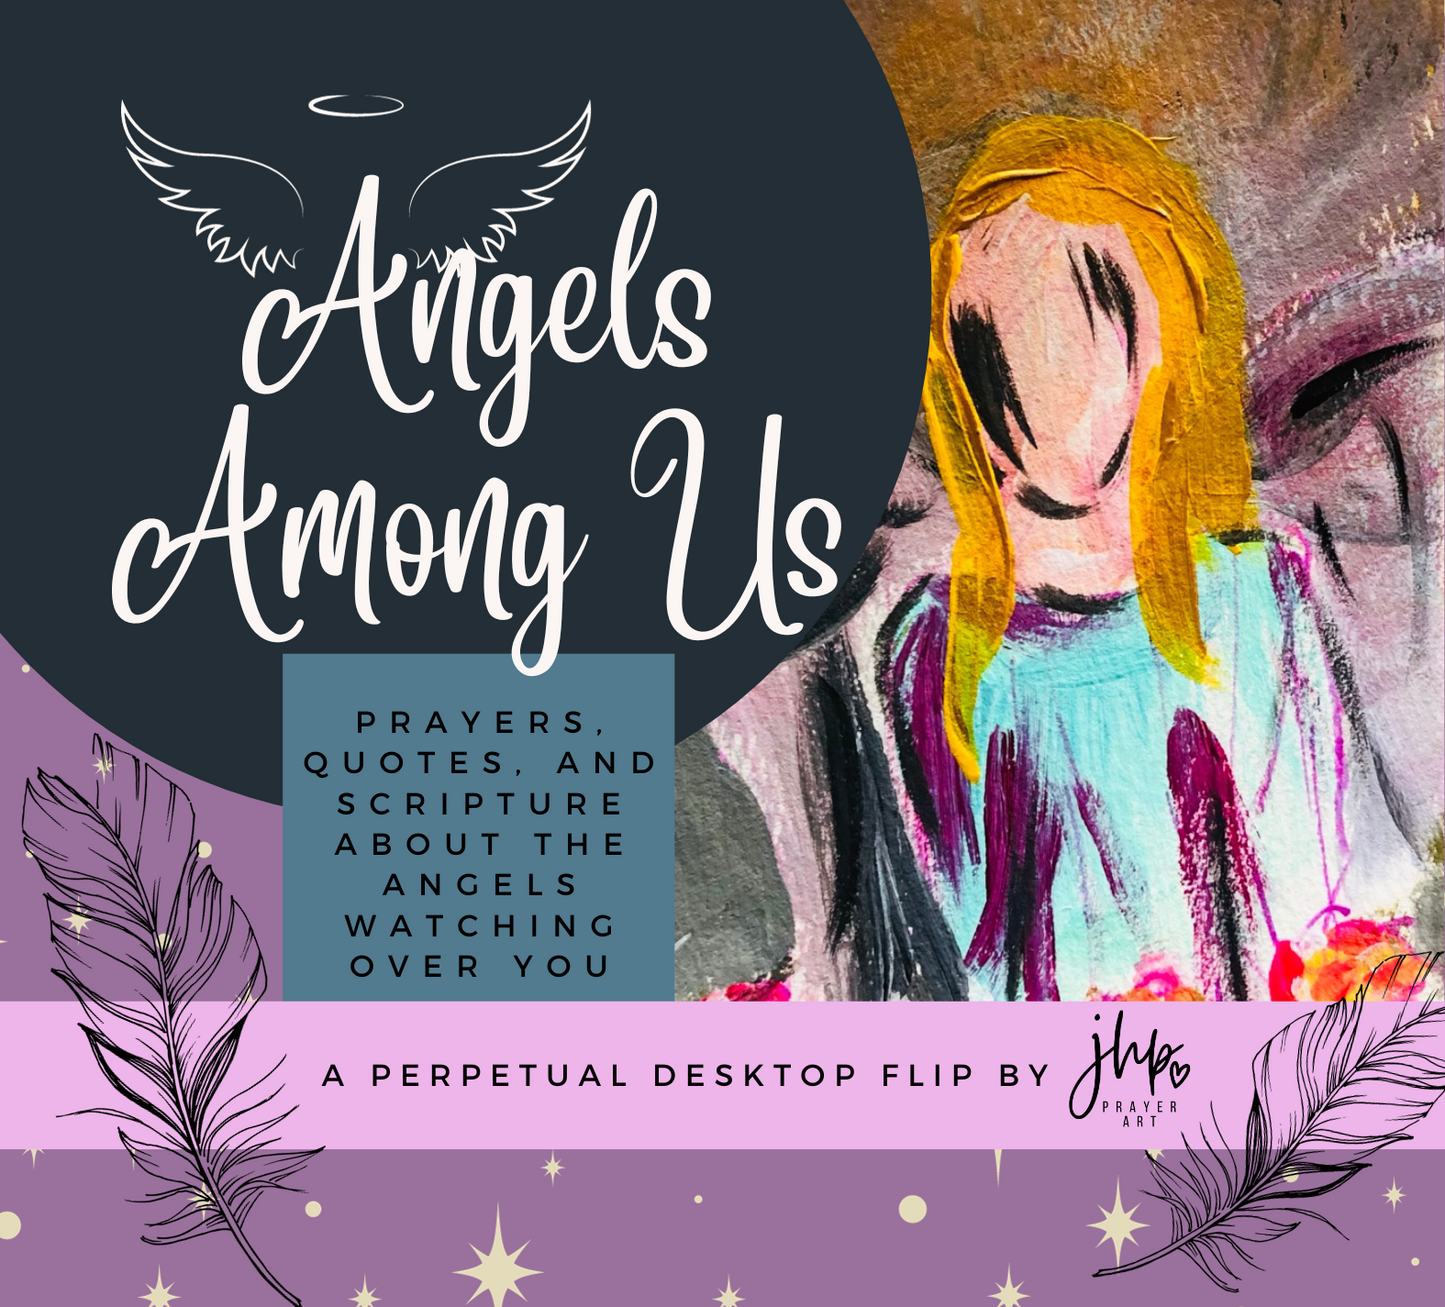 Angels Among Us Desktop Flip